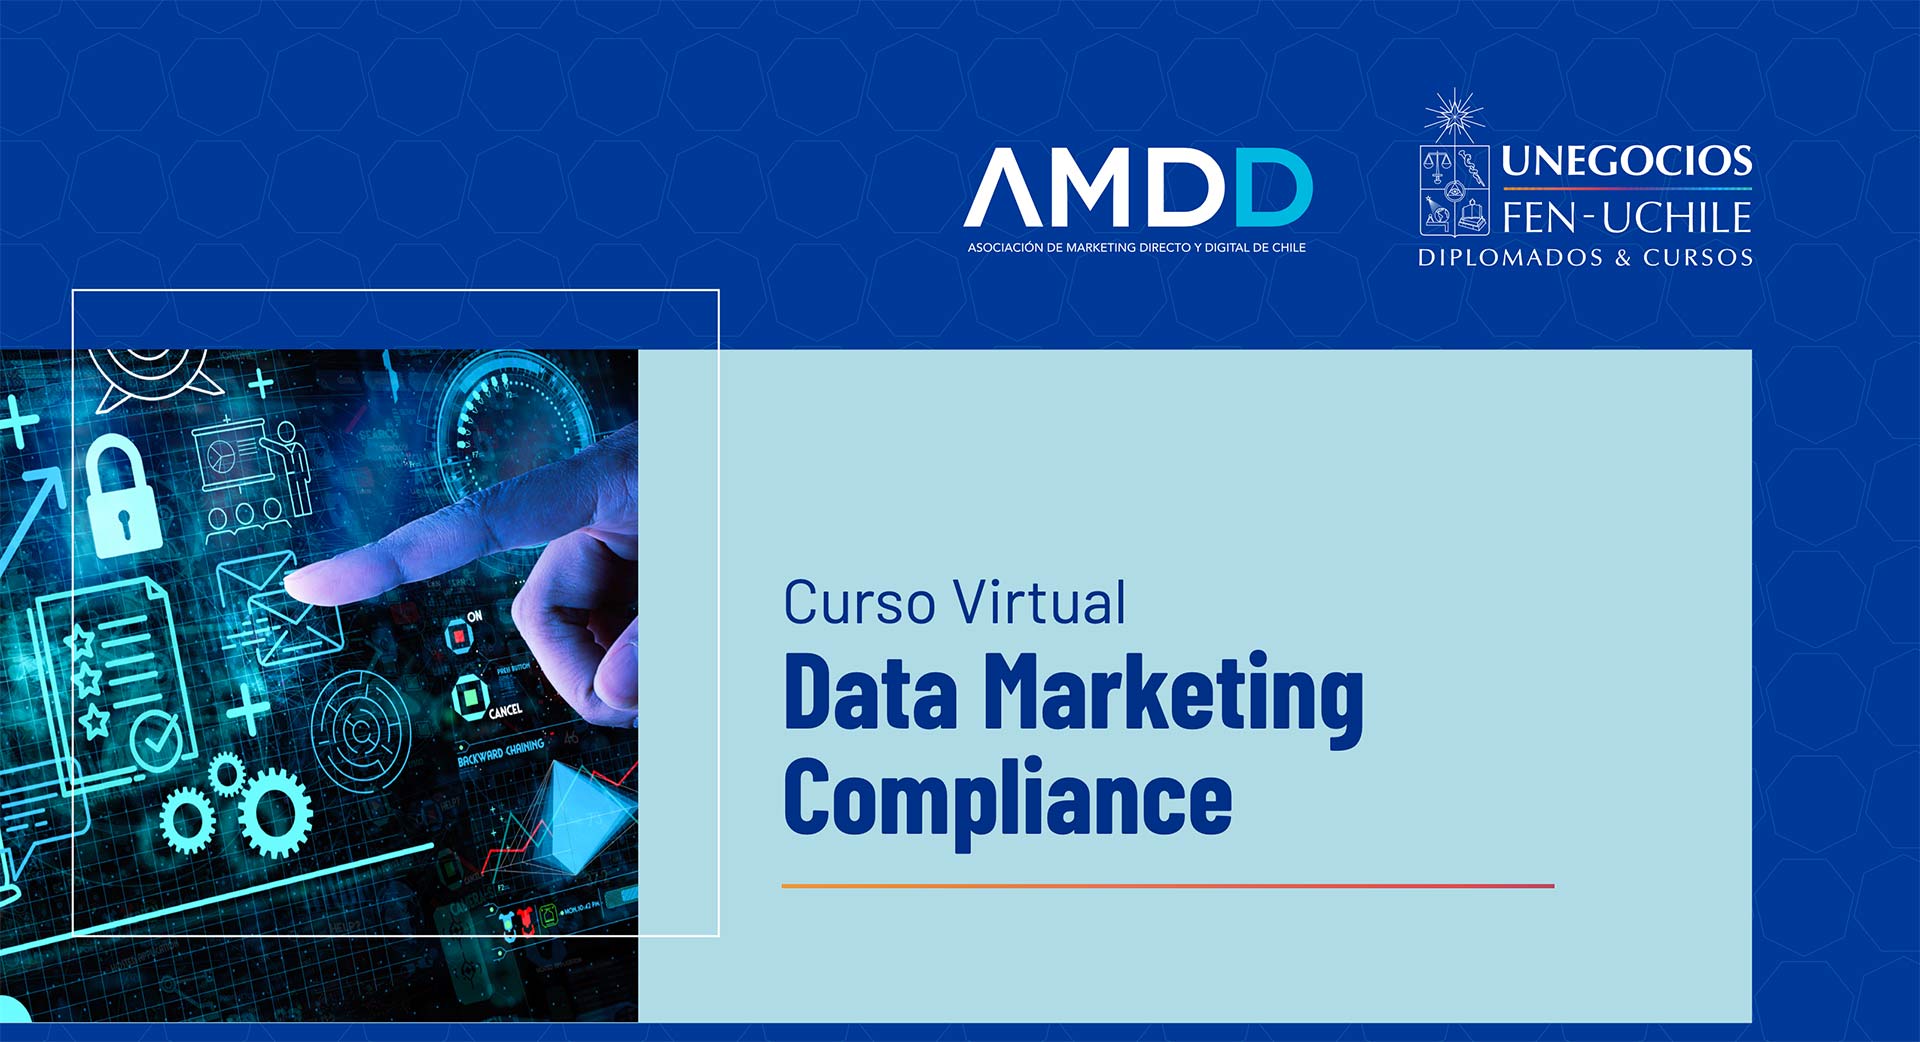 Curso Data Marketing Compliance Unegocios-AMDD